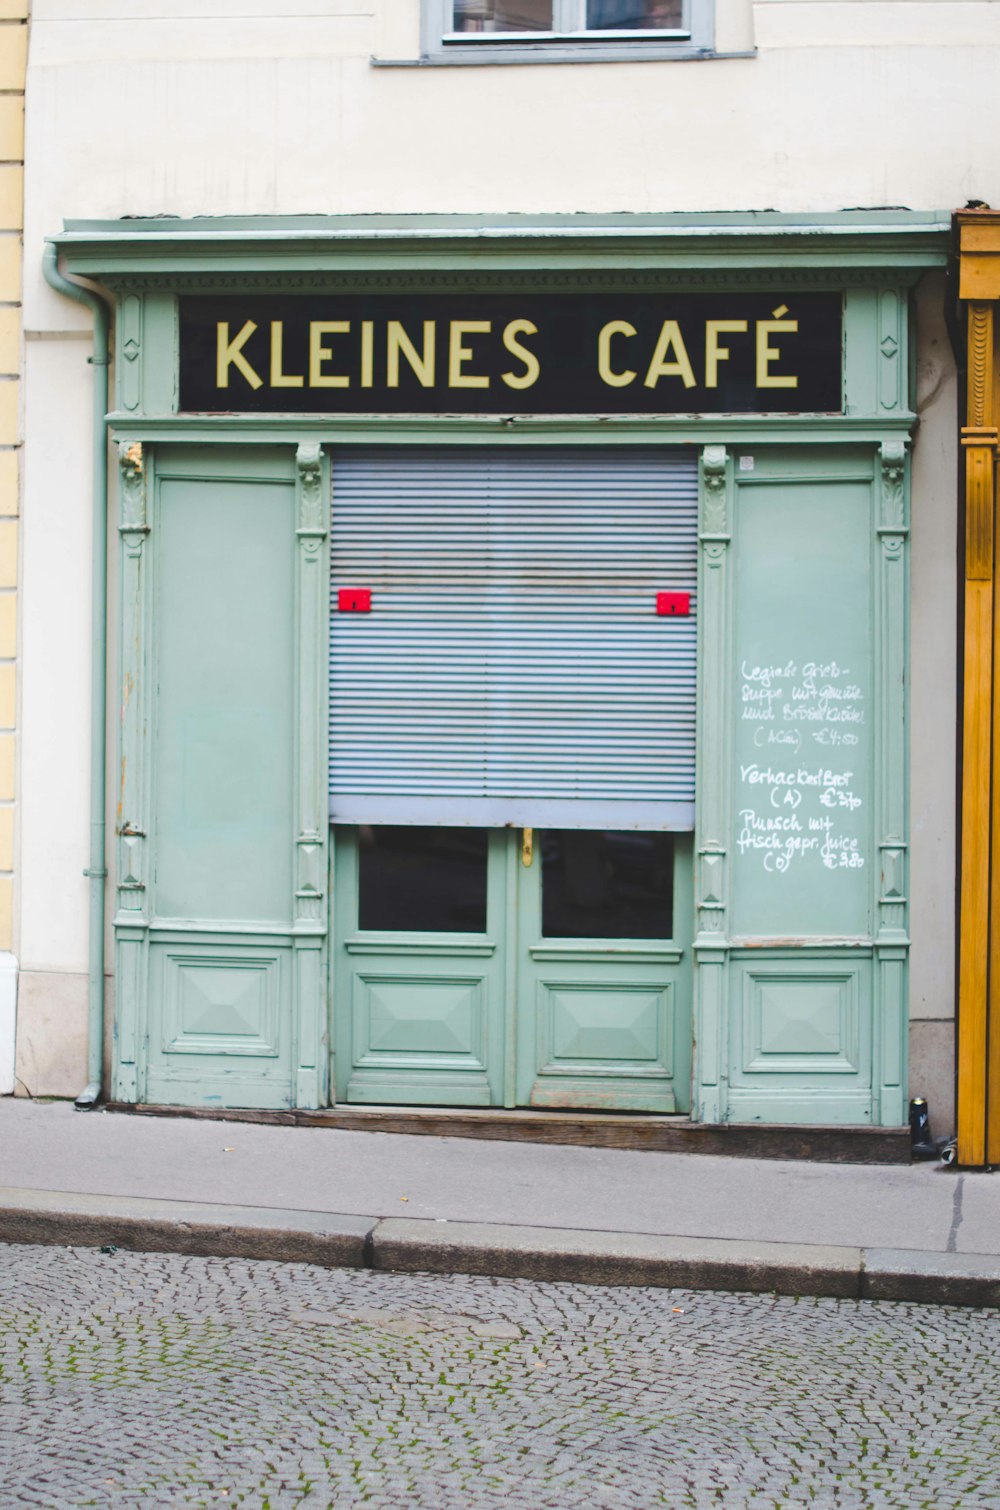 Kleines Cafe shop